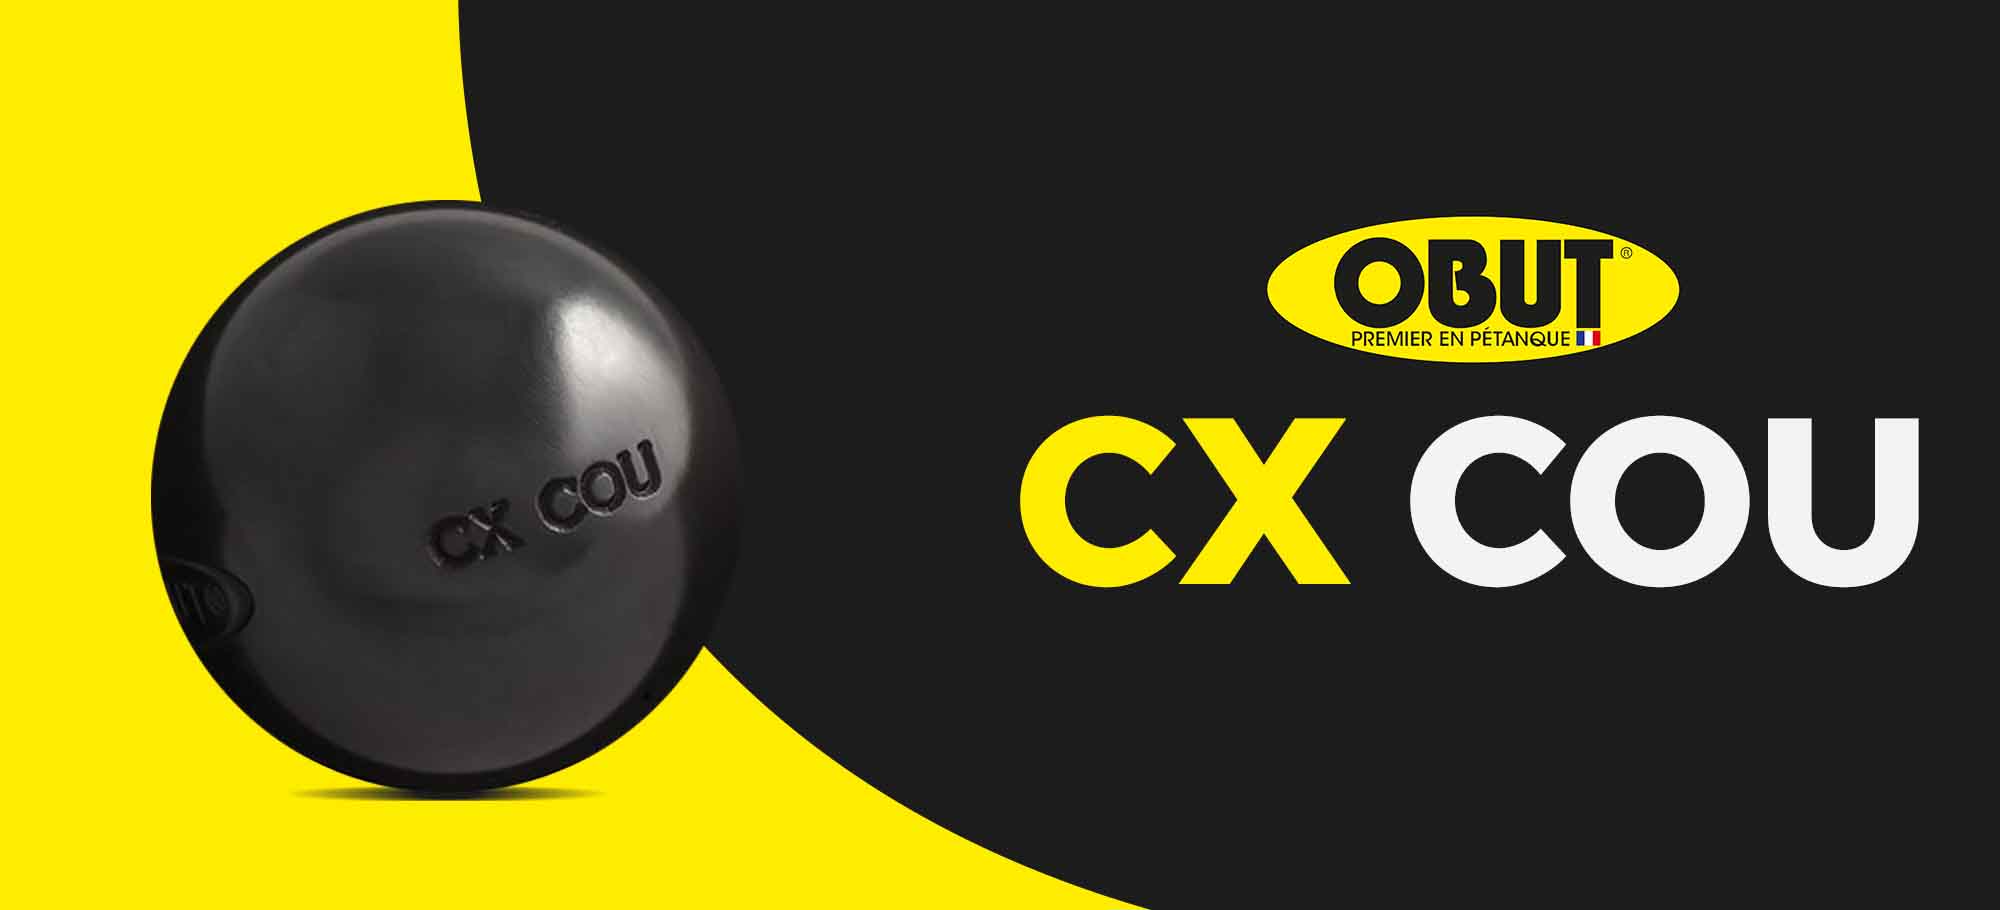 You are currently viewing Focus sur la CX COU d’Obut